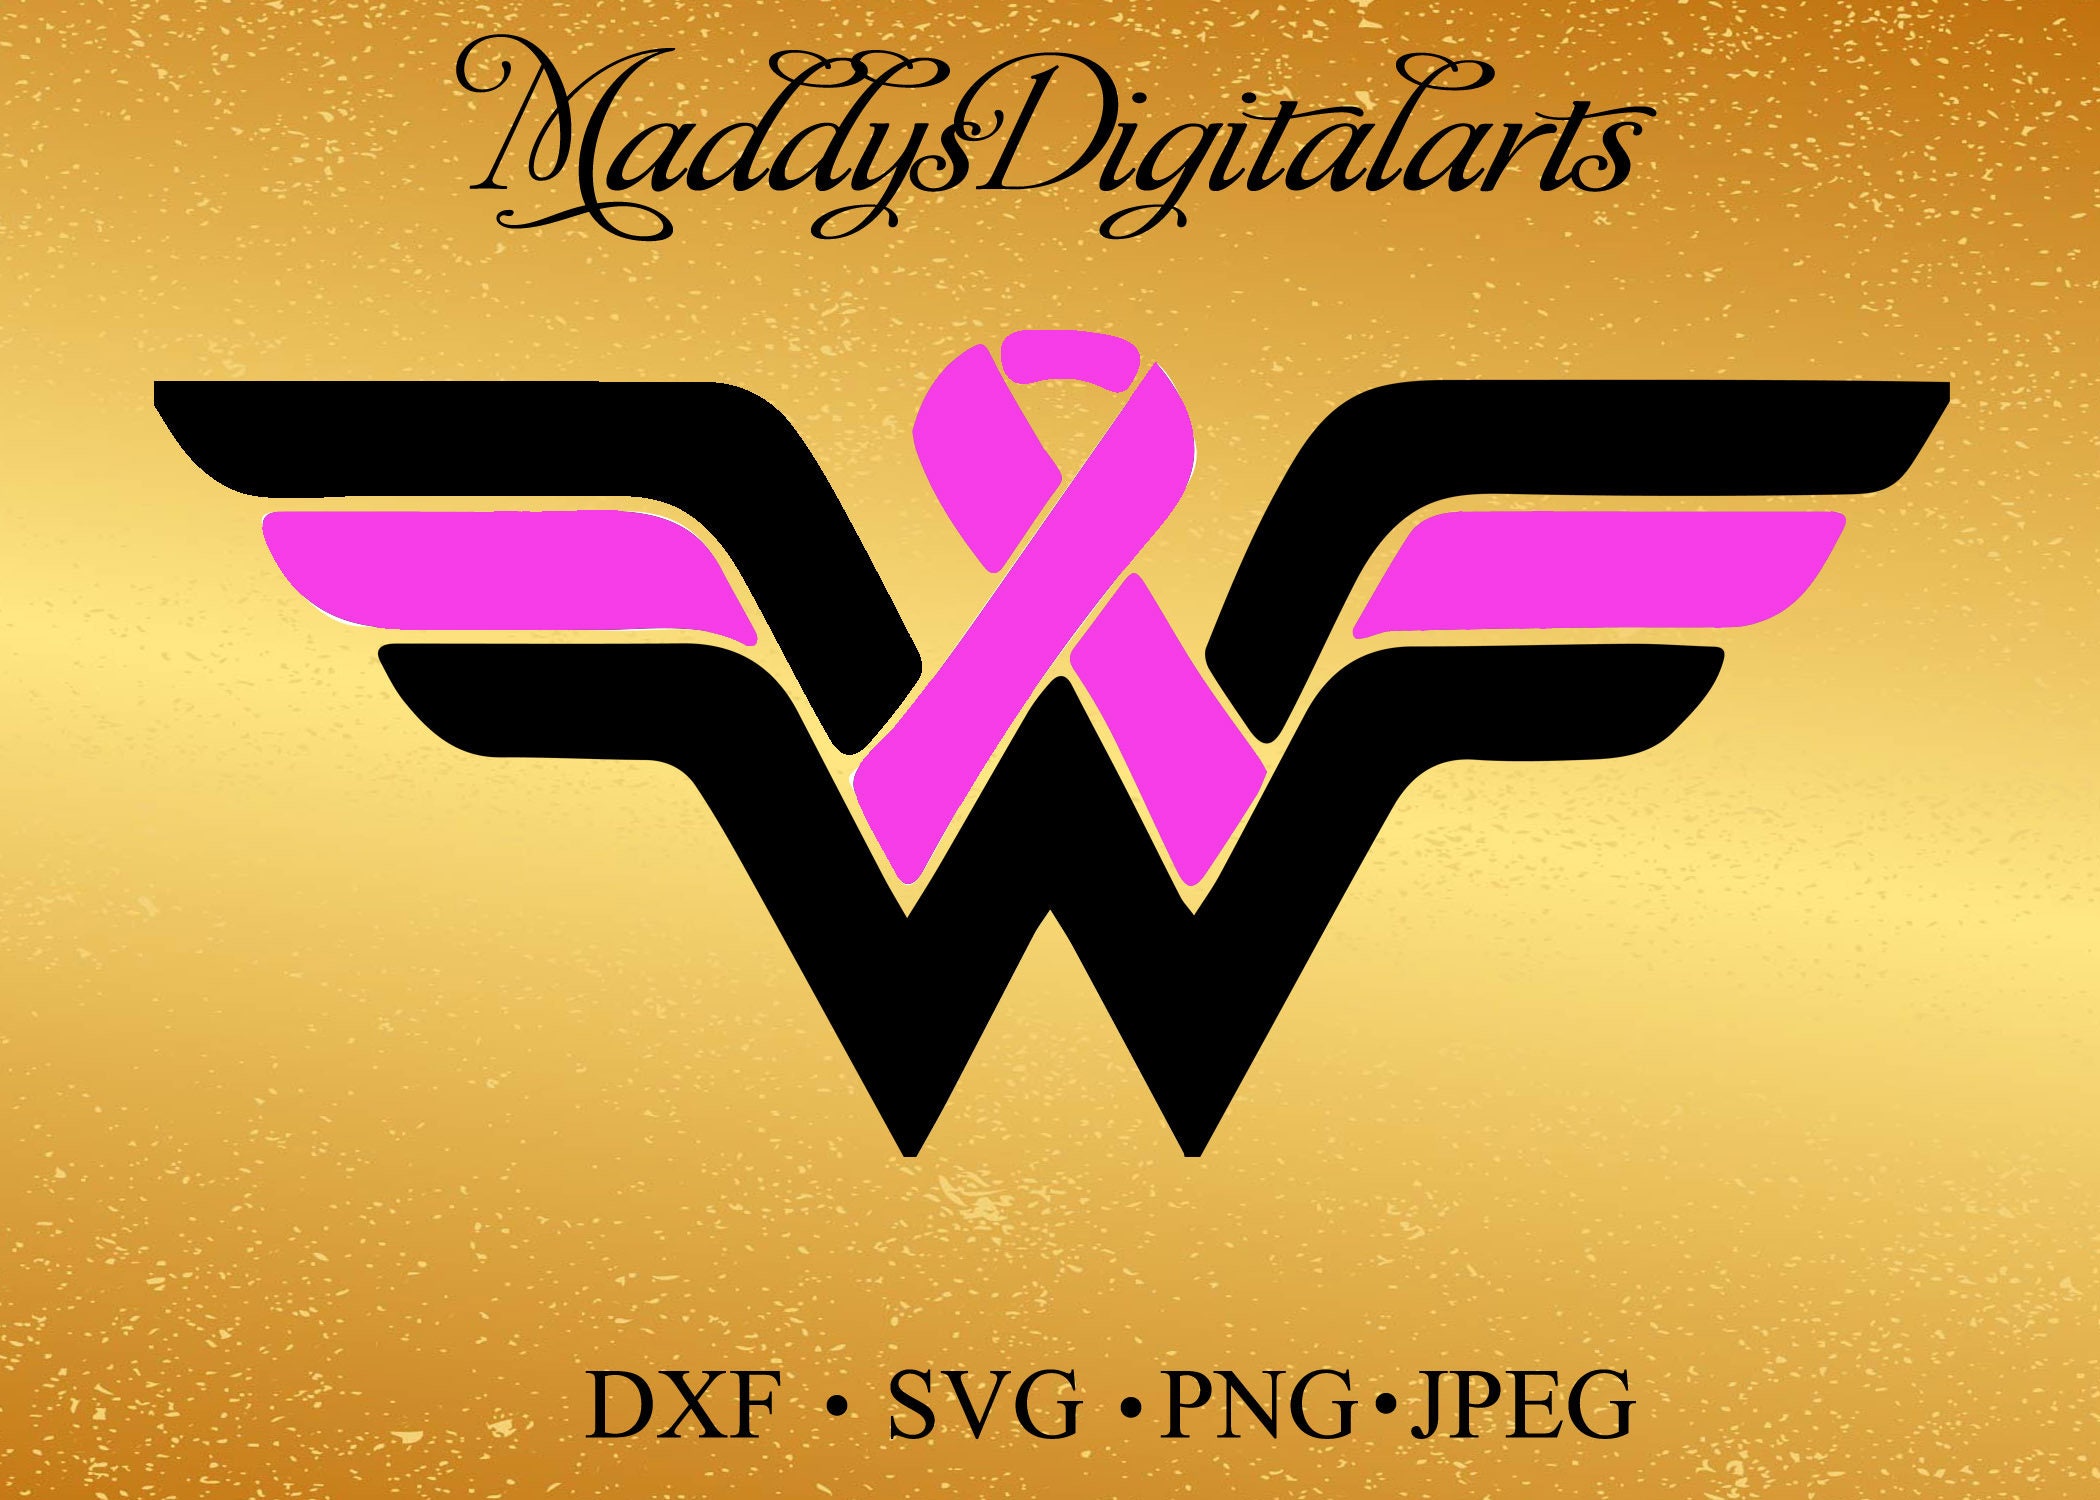 Download Wonder Woman Breast Cancer Awareness svgdxf cancer Ribbon